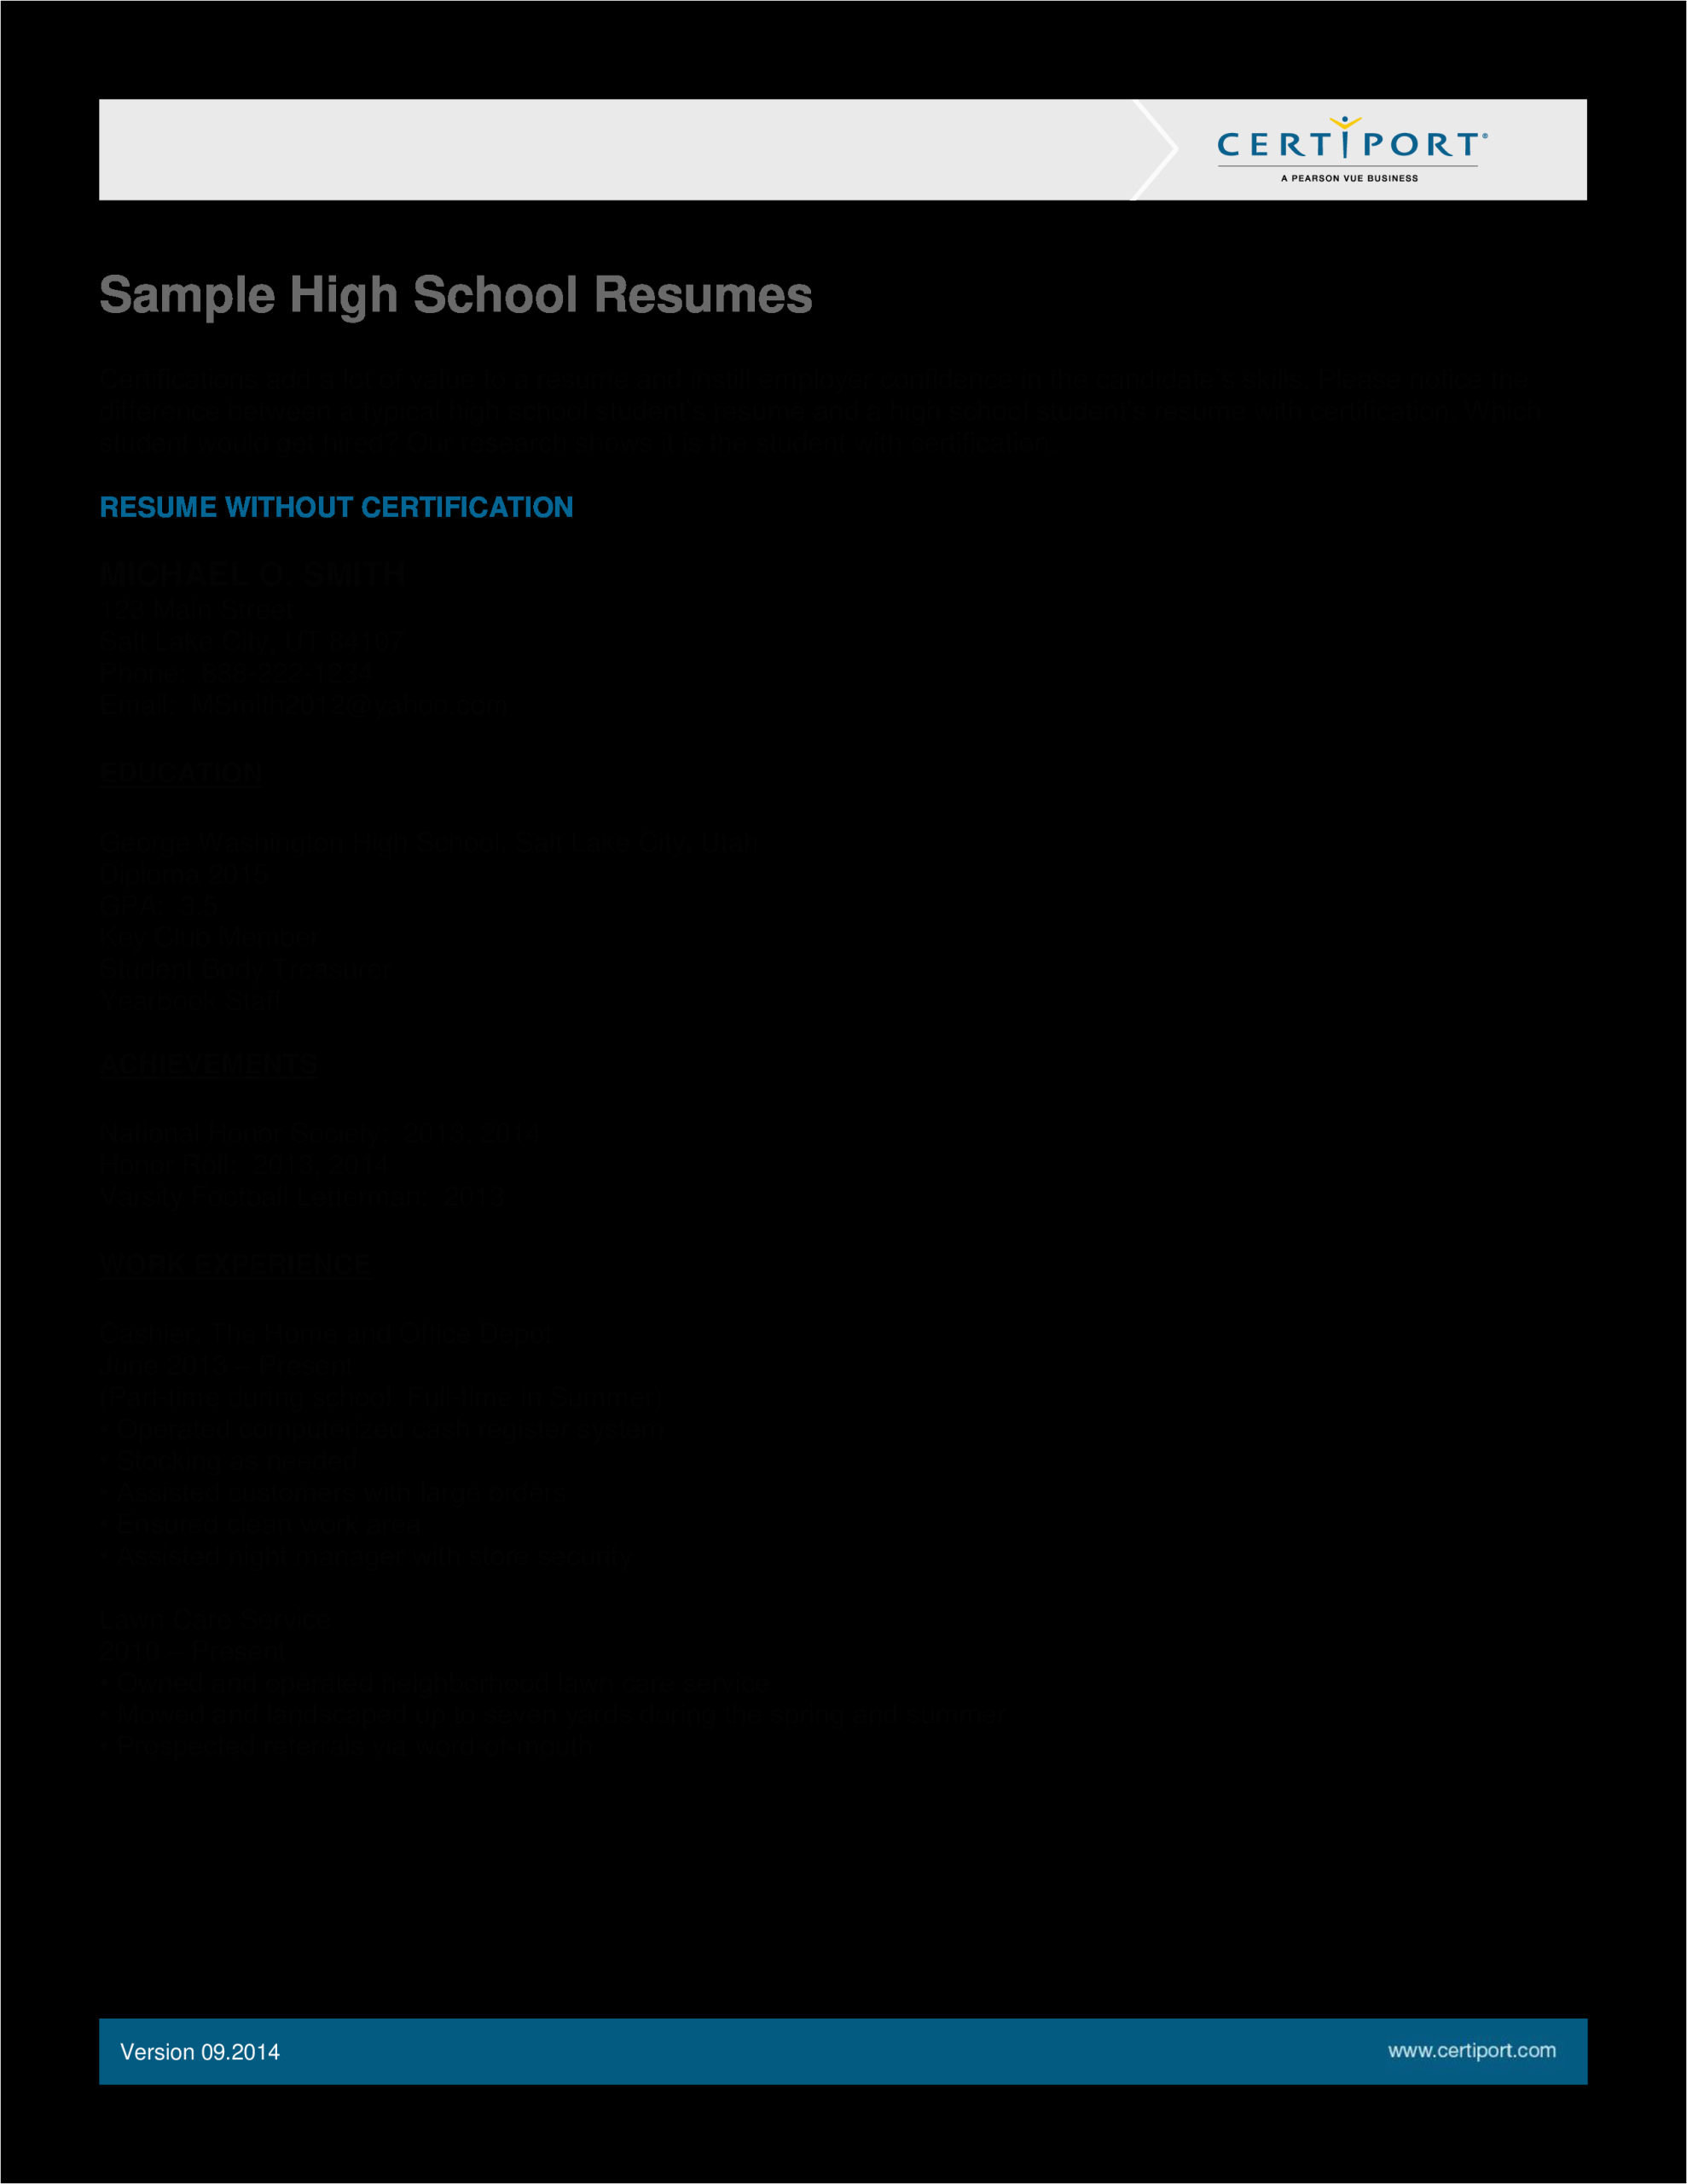 Sample School Resume for High School Applications Sample High School Student Resume